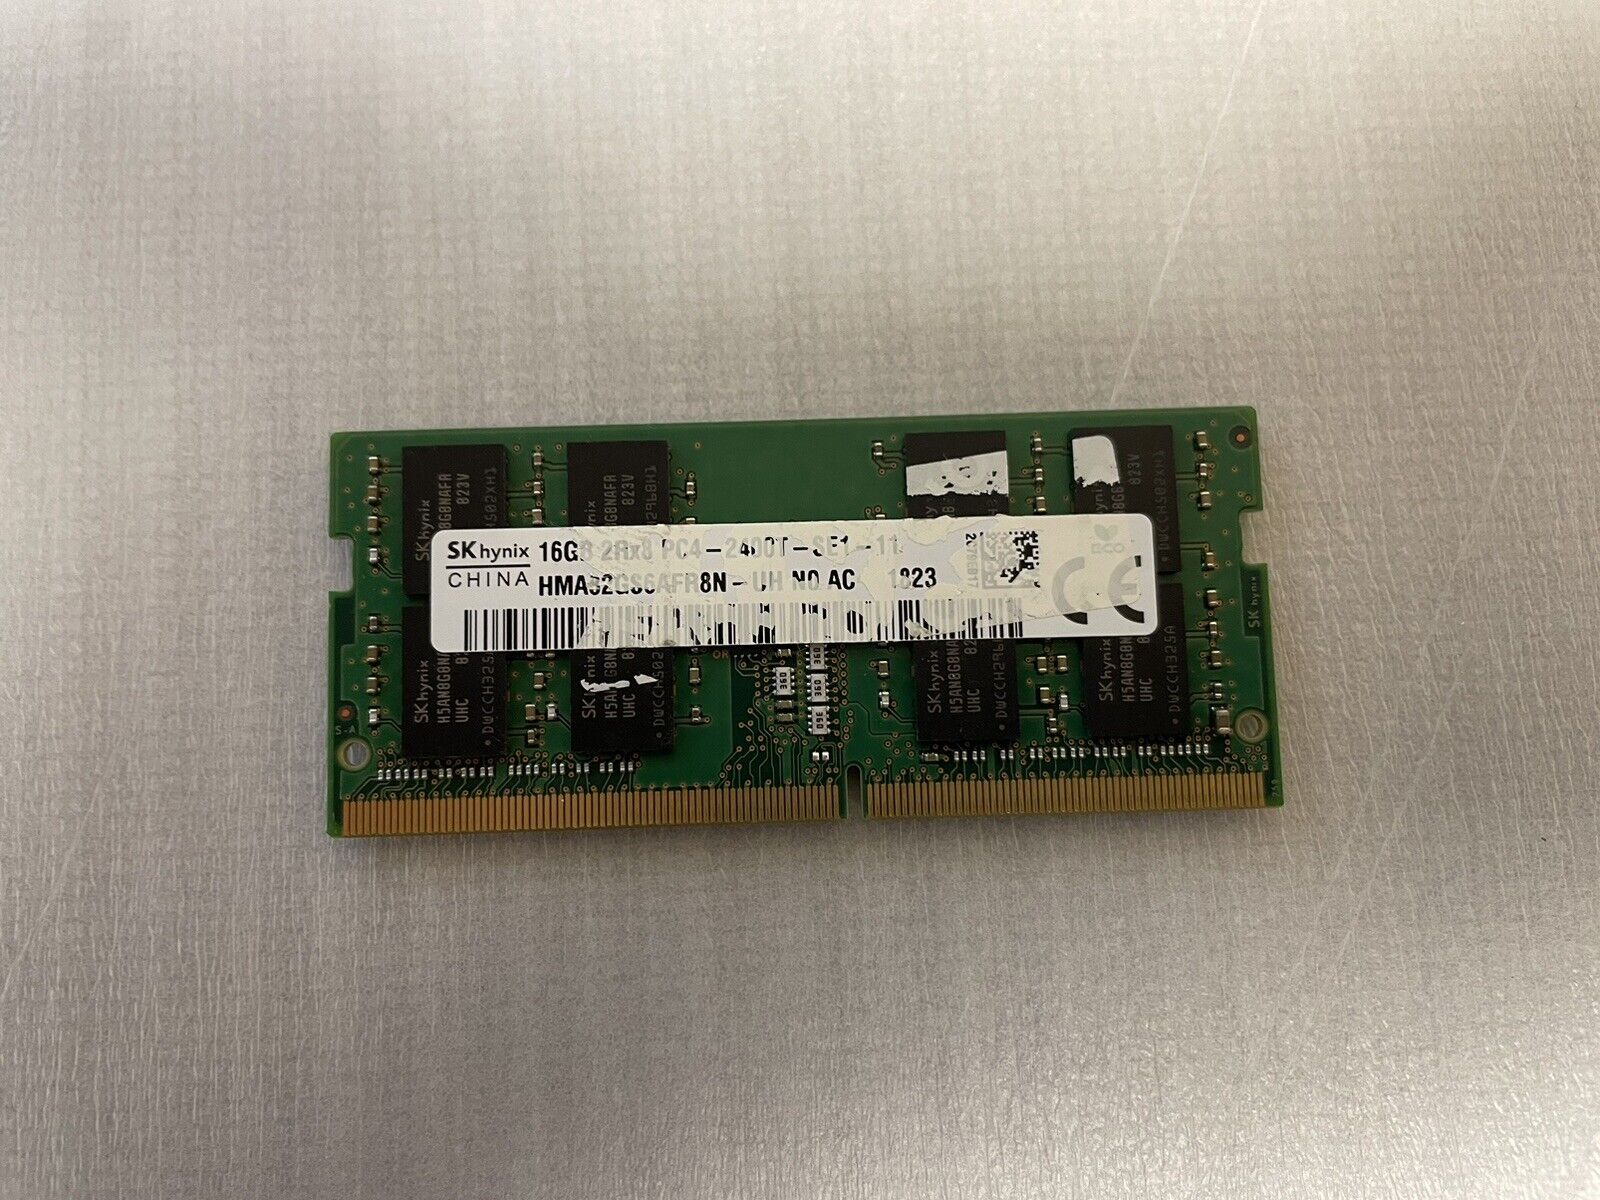 SK Hynix 16GB 2Rx8 PC4-2400T-SE1-11 SODIMM Laptop Memory